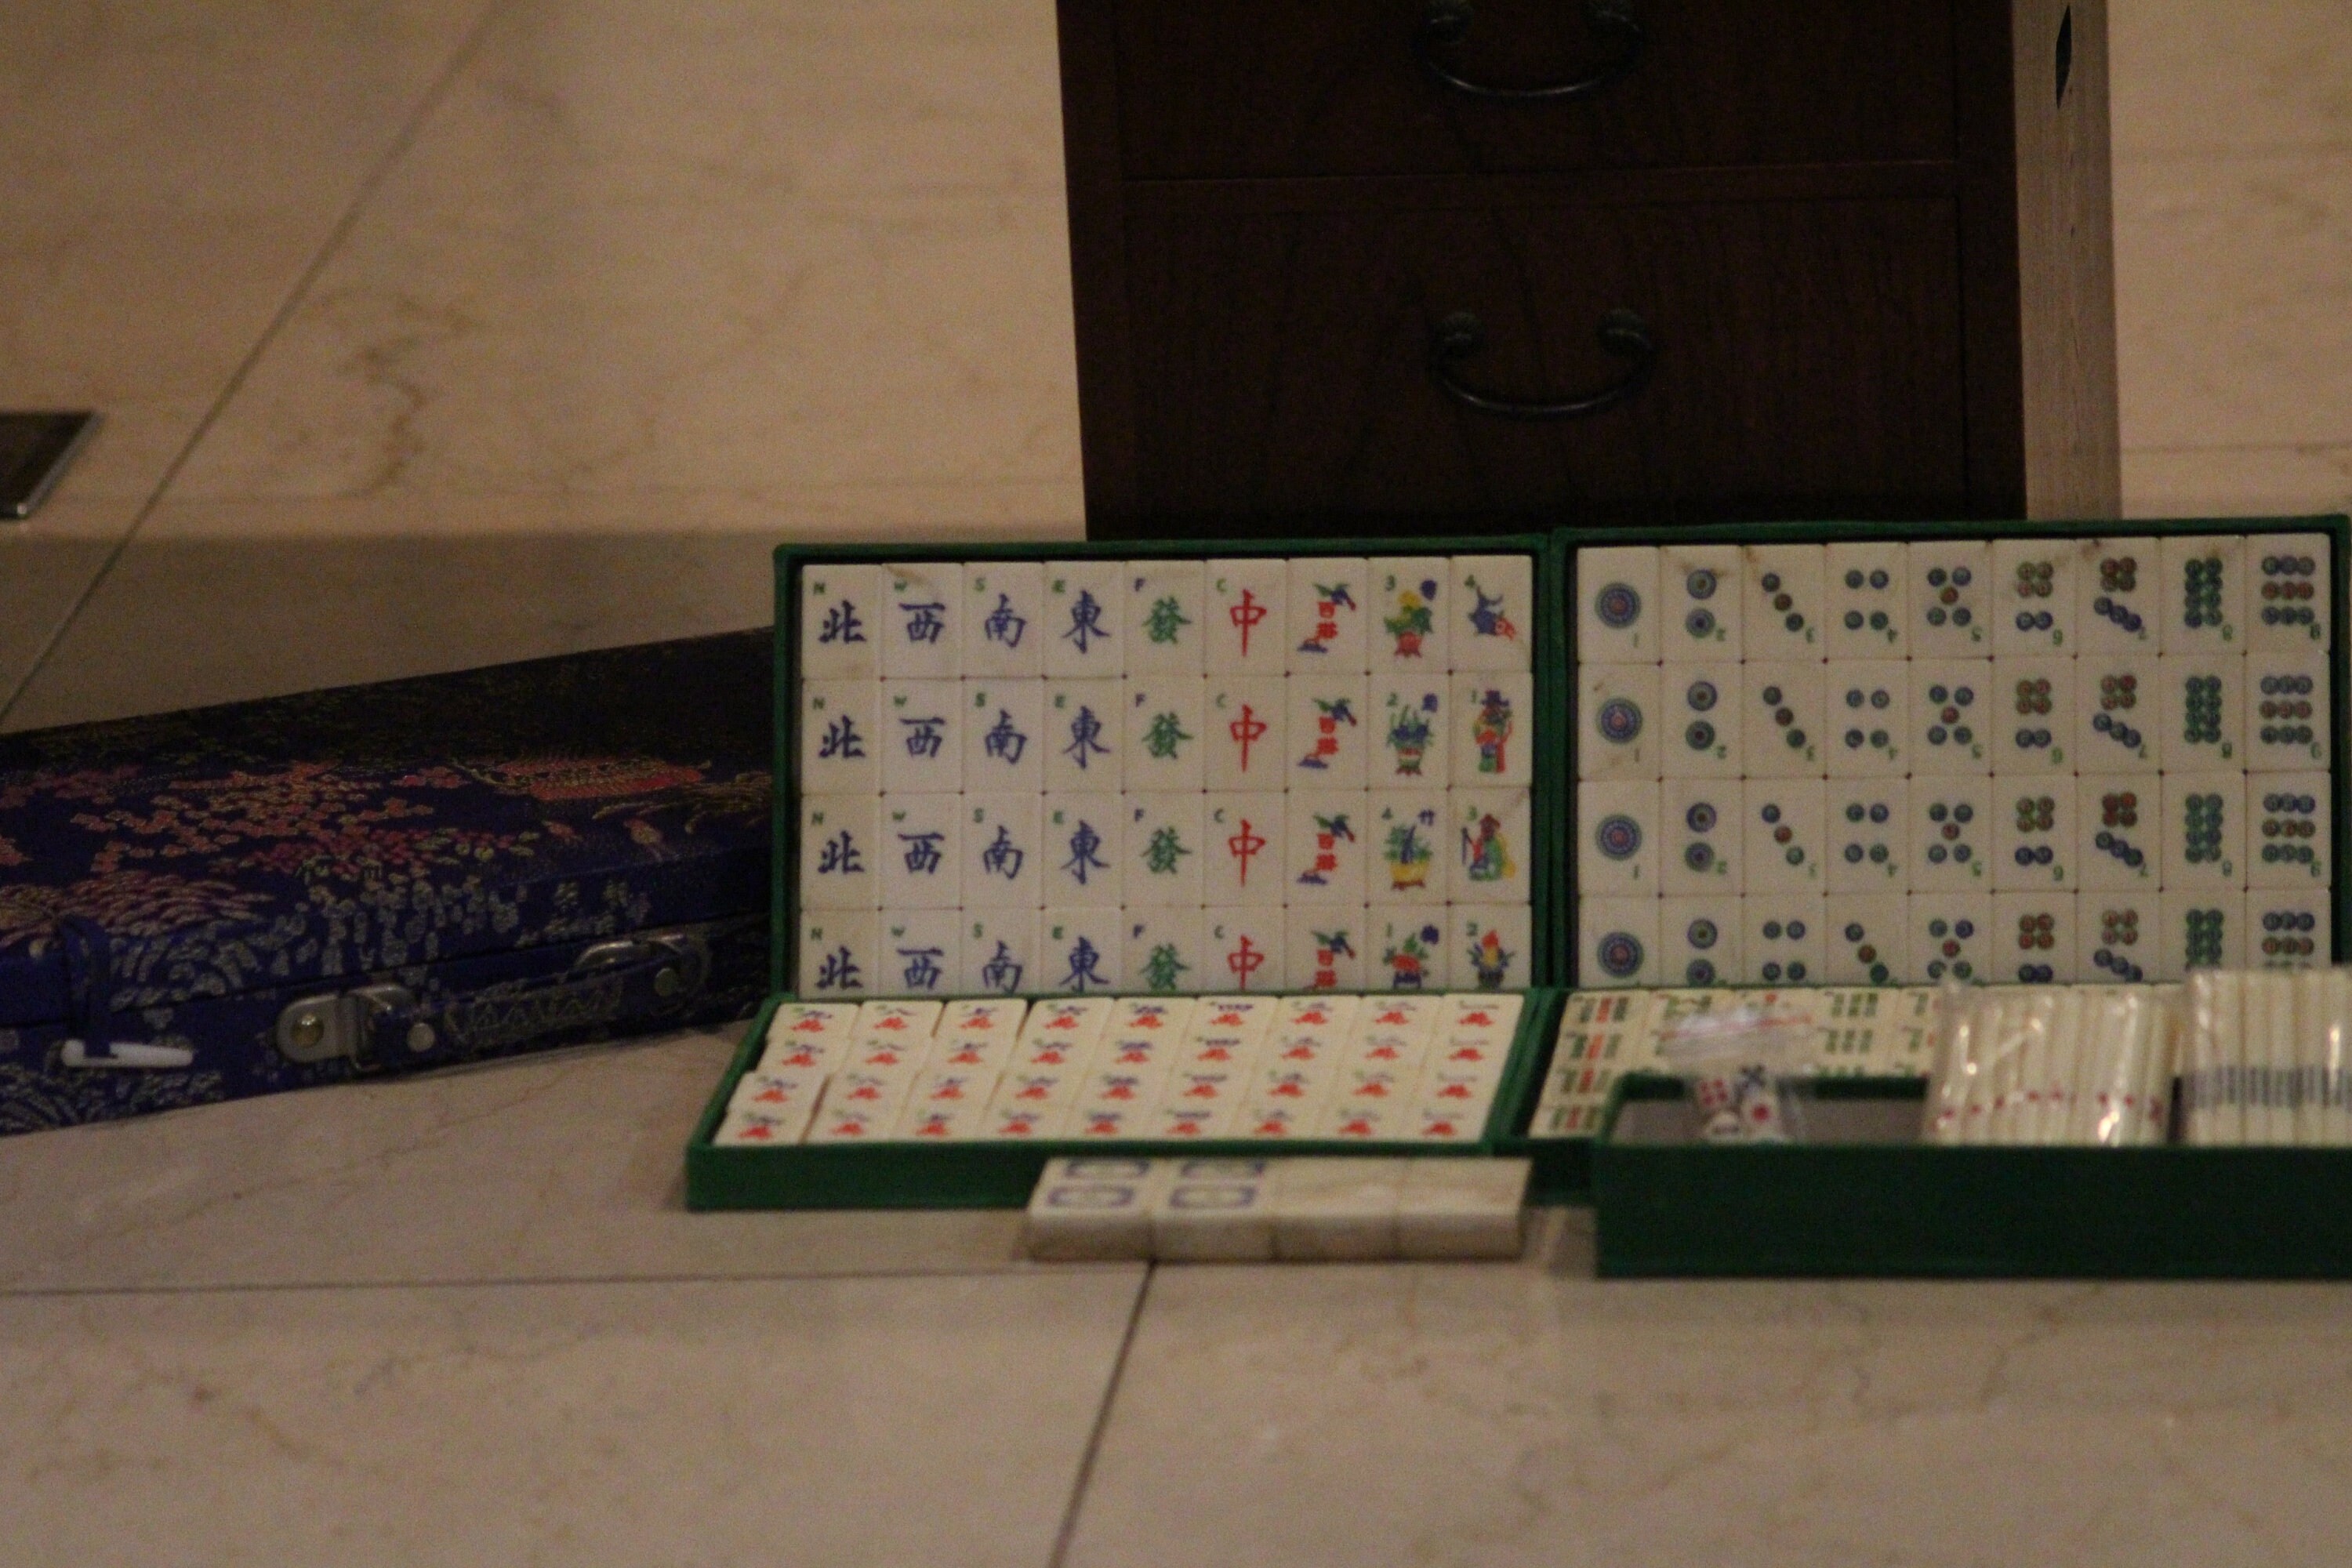 Hot Mahjong set Antique mahjong boxed English mahjong tourist dormitory  mahjong with antique leather box family table game mj12 _ - AliExpress  Mobile